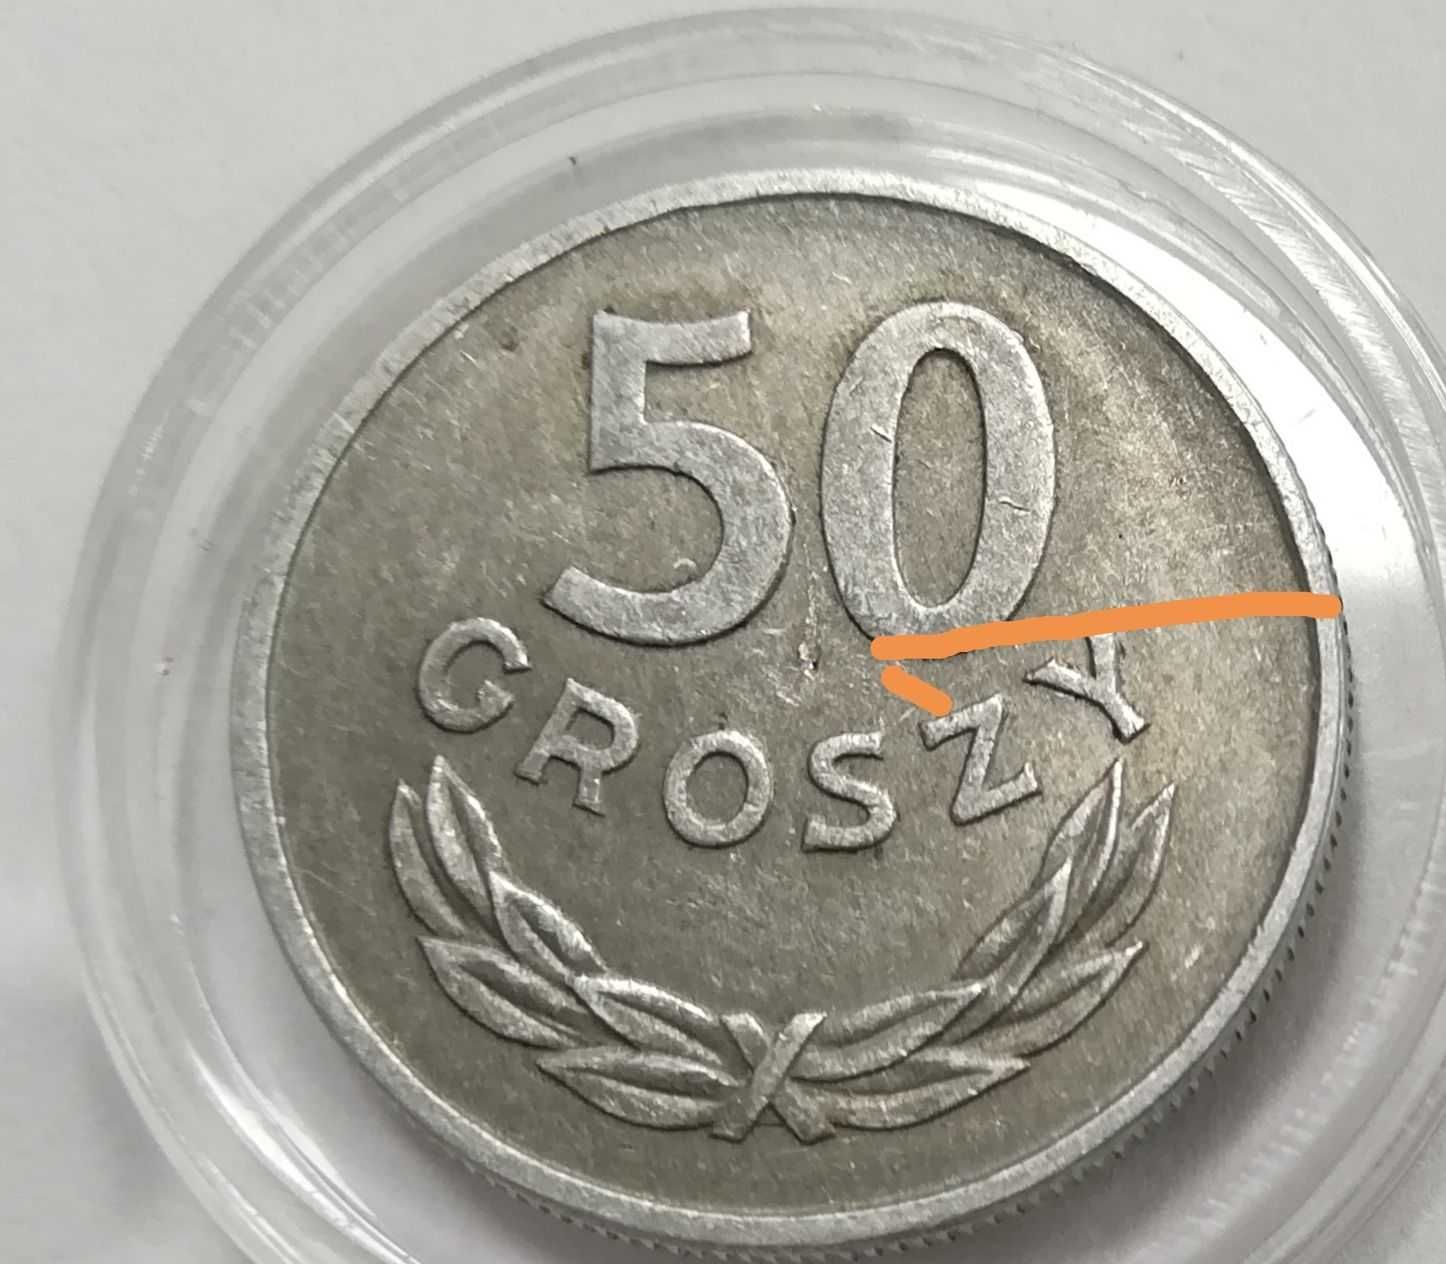 Moneta 50 gr z 1972 r stan bardzo dobry.  destrukt zaznaczony